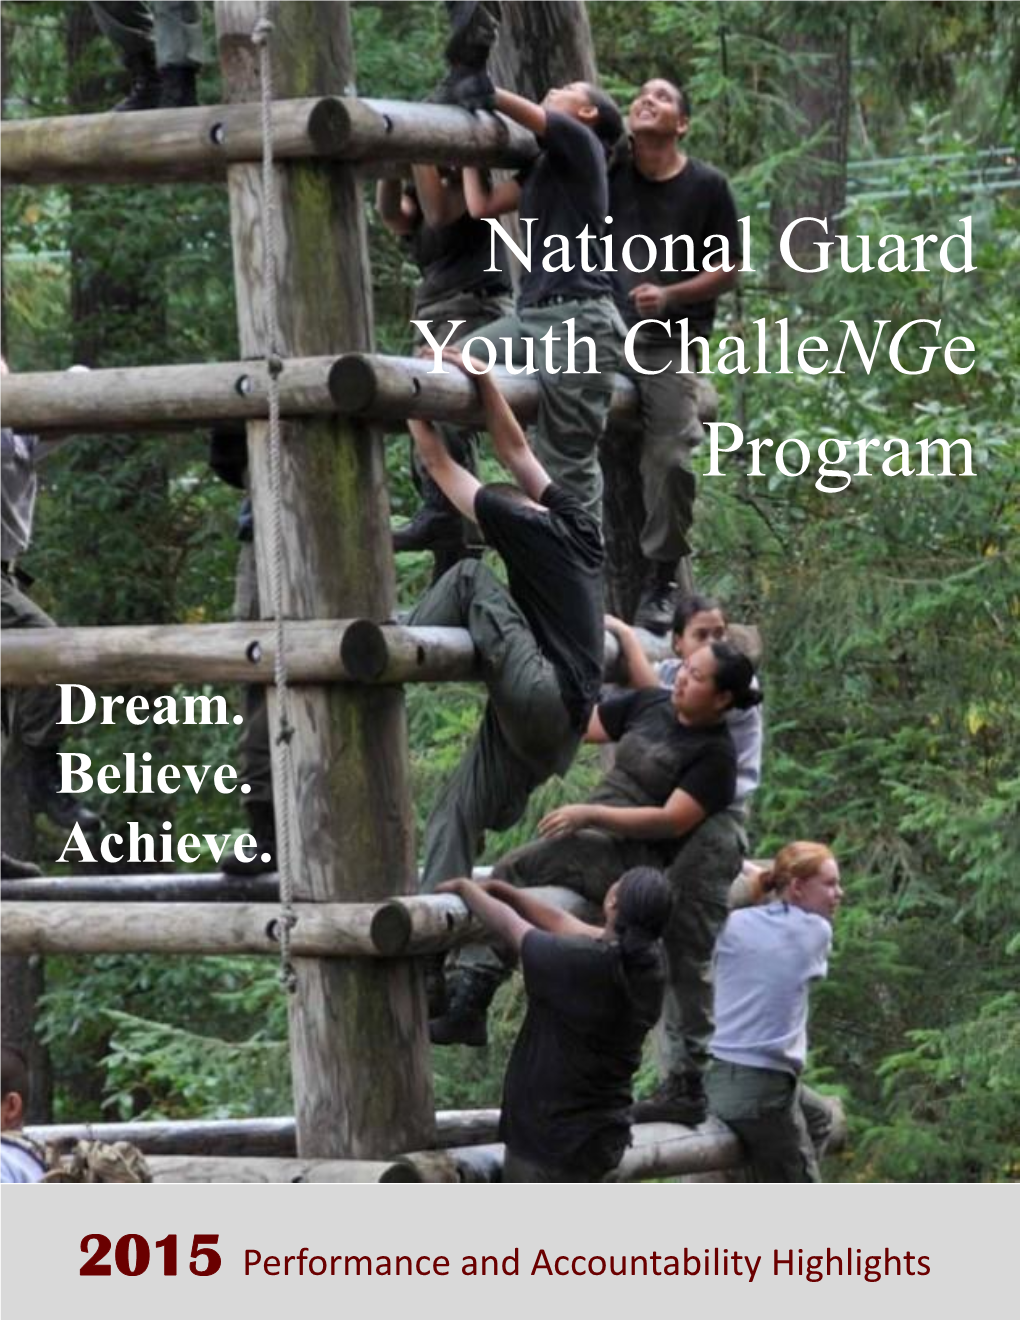 National Guard Youth Challenge Program